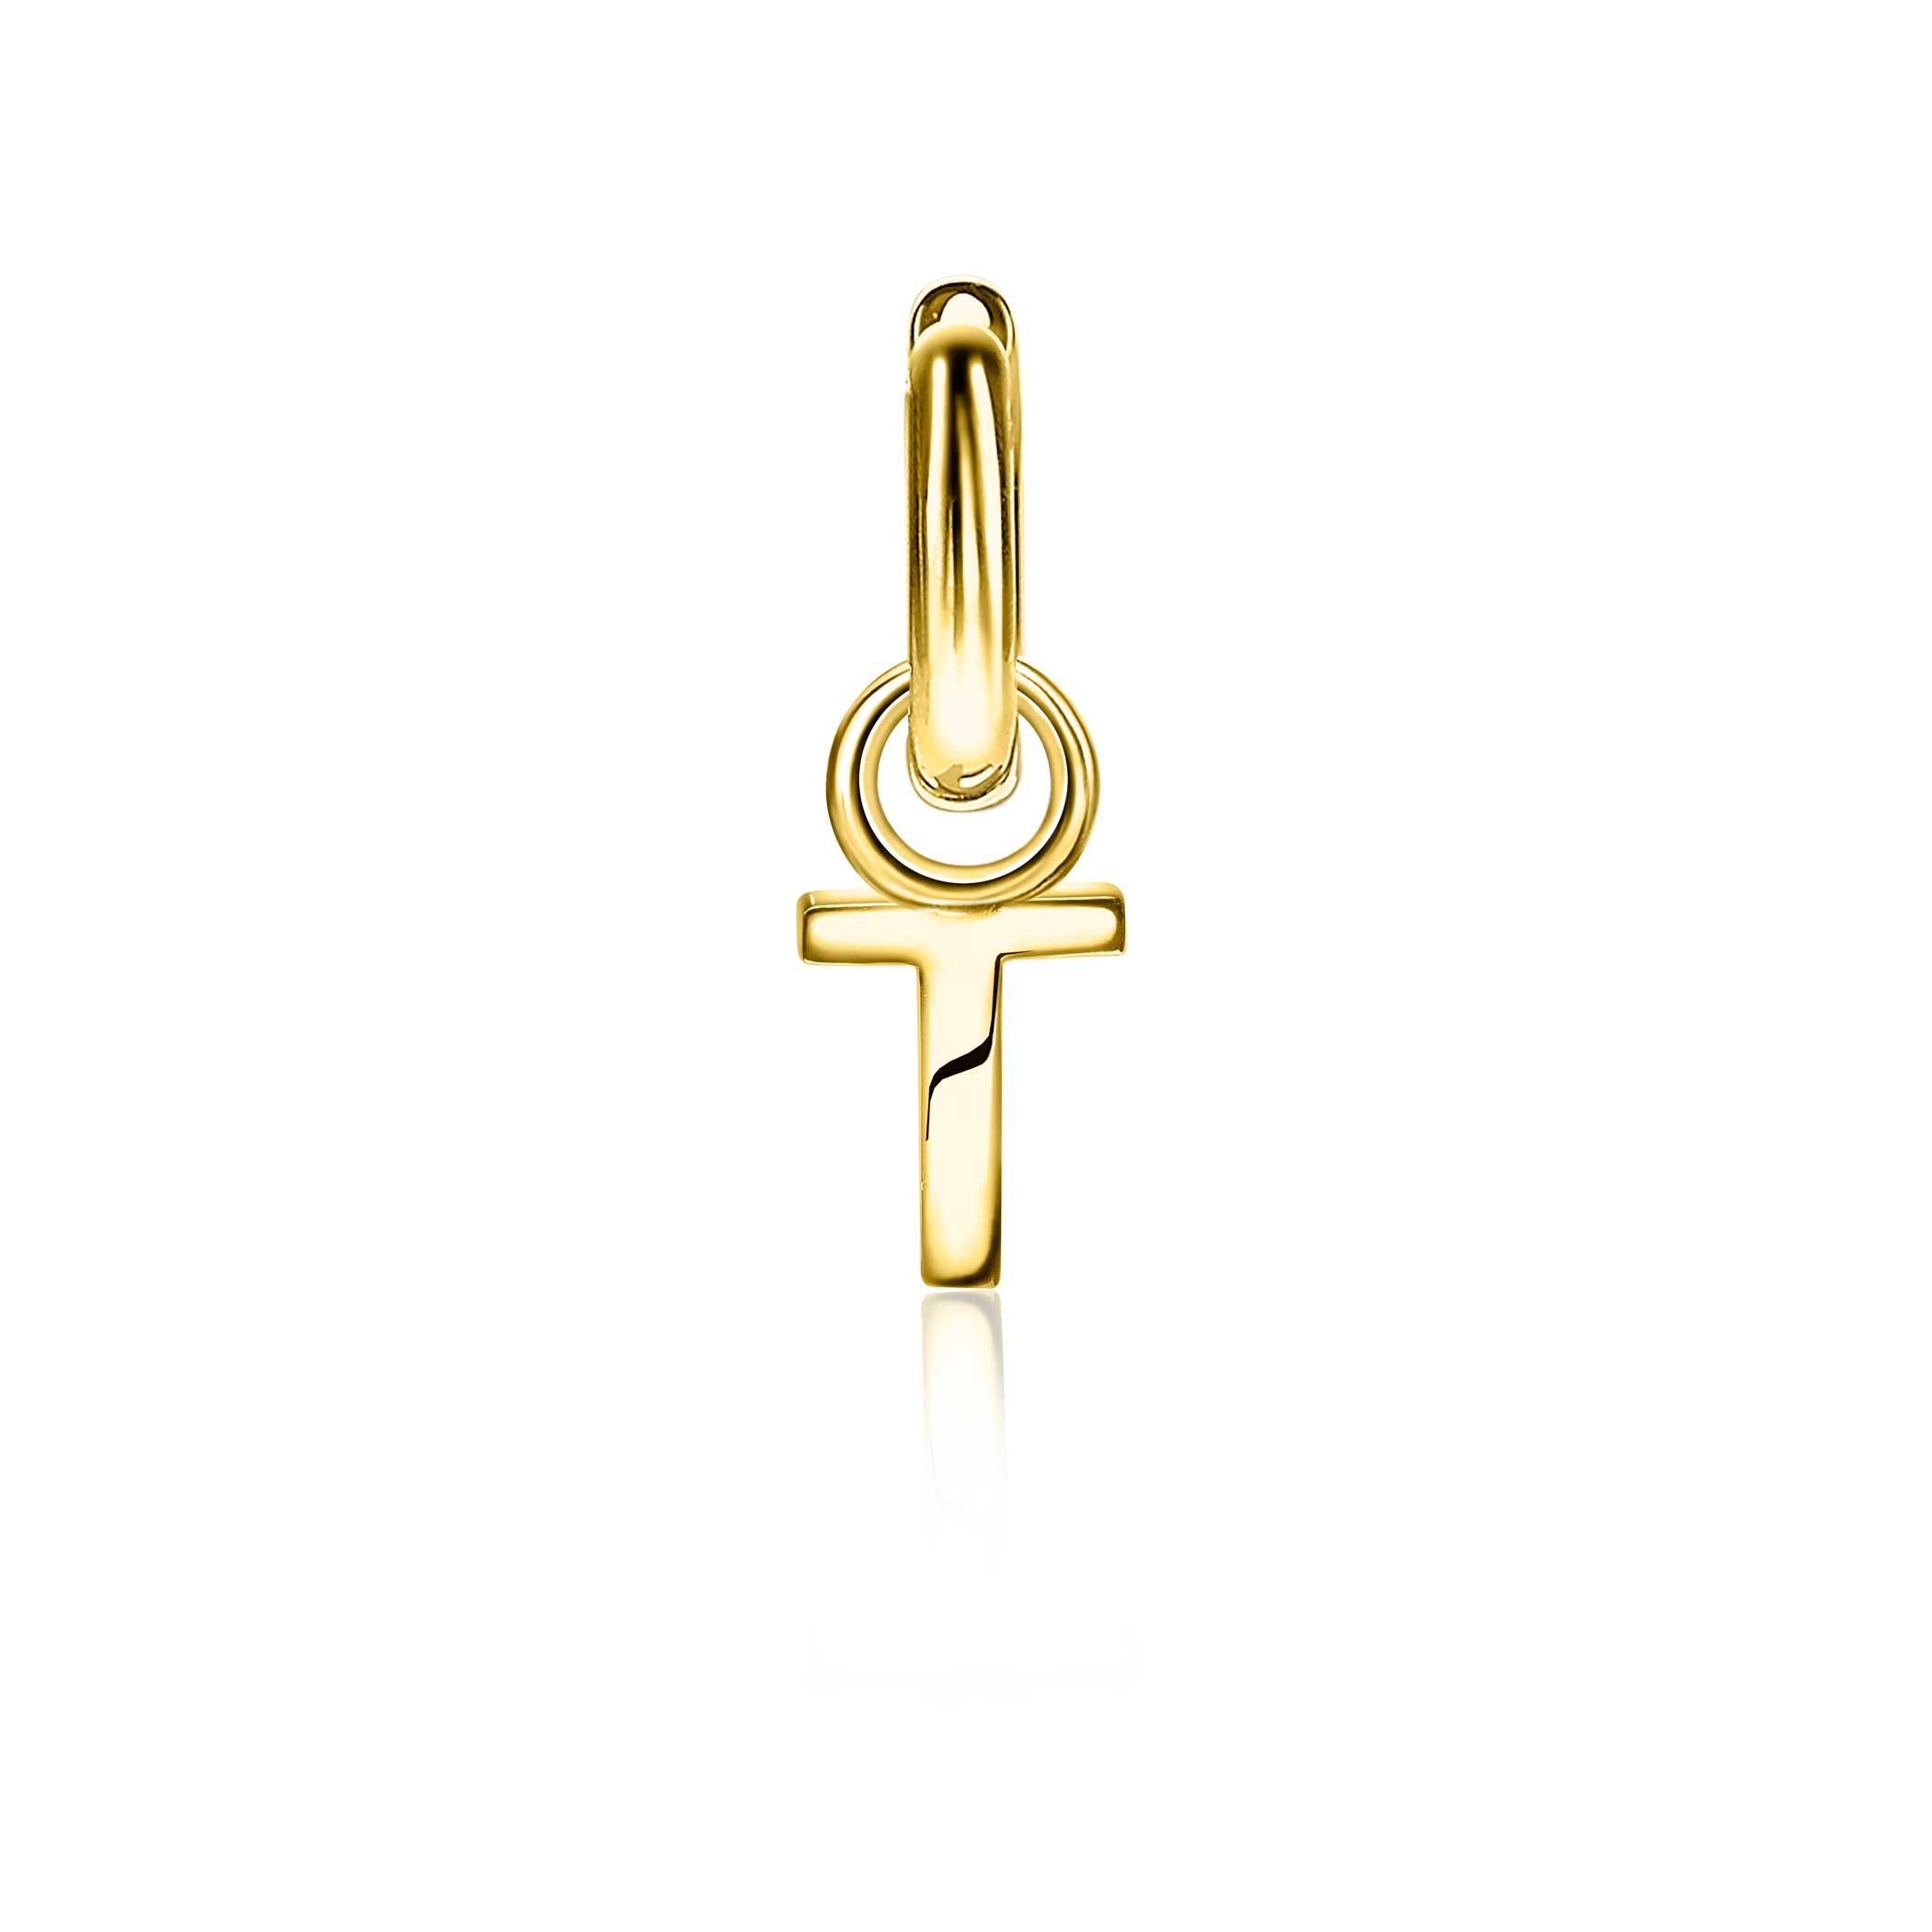 ZINZI Gold Plated Letter Earrings Pendant T price per piece ZICH2145T (excl. hoop earrings)